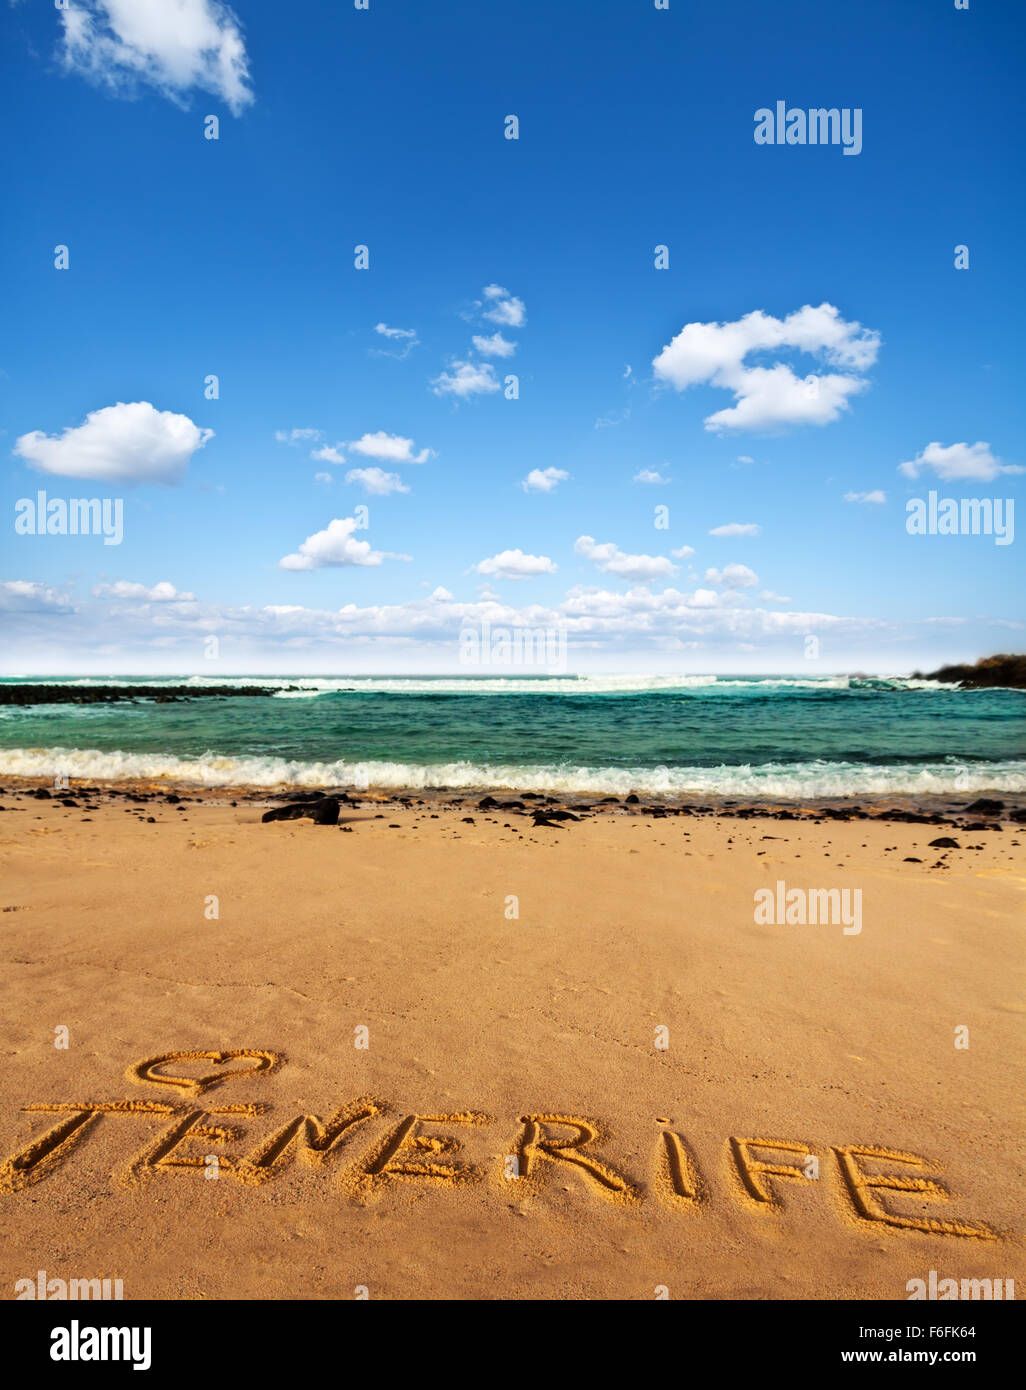 beach sand with written word Tenerife Stock Photo